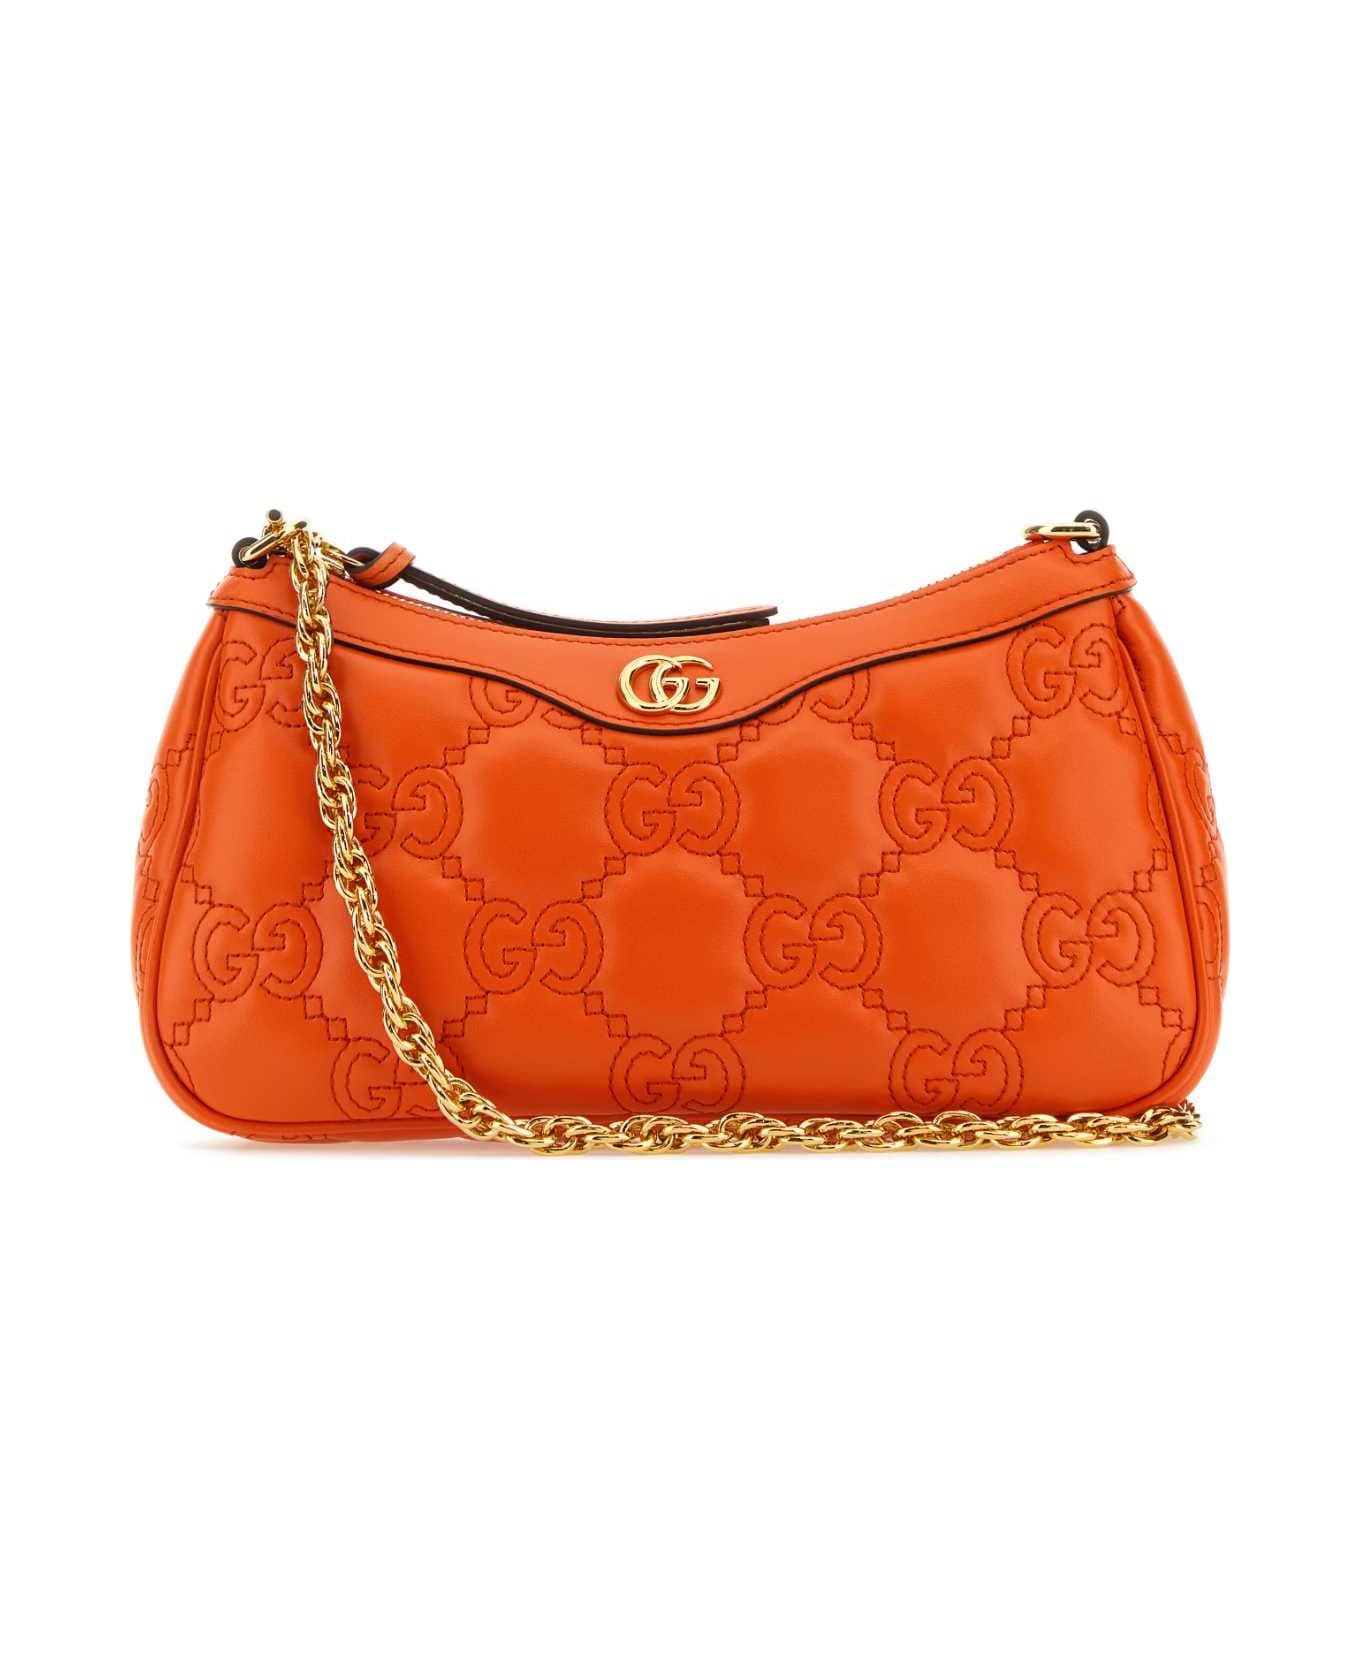 Gucci Orange Leather Handbag - DPORANGENATURAL